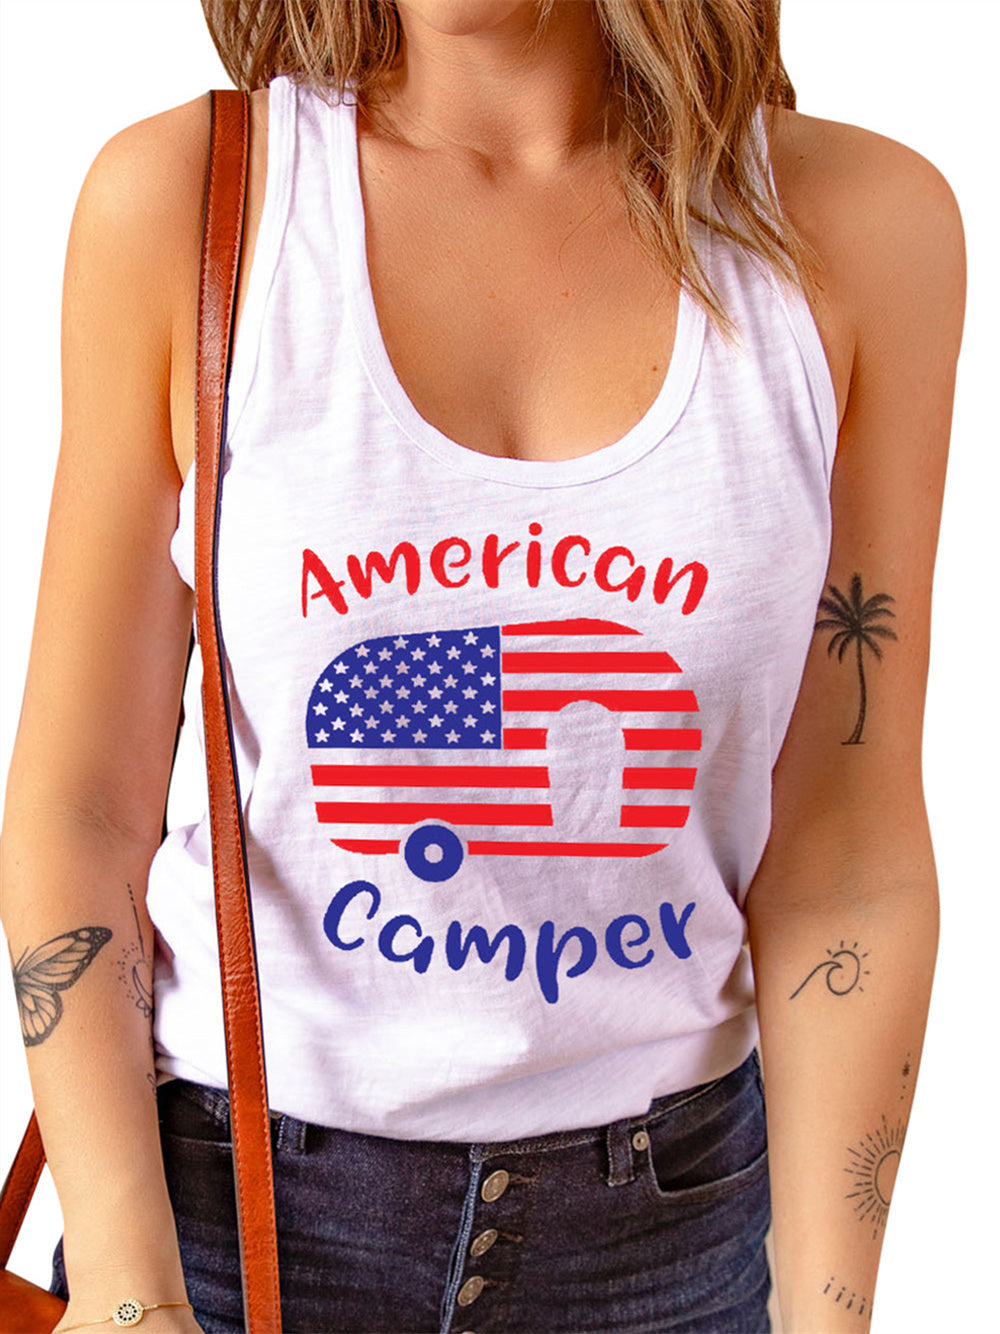 American Camper Pattern Printed Backstrap Patriotic Vest